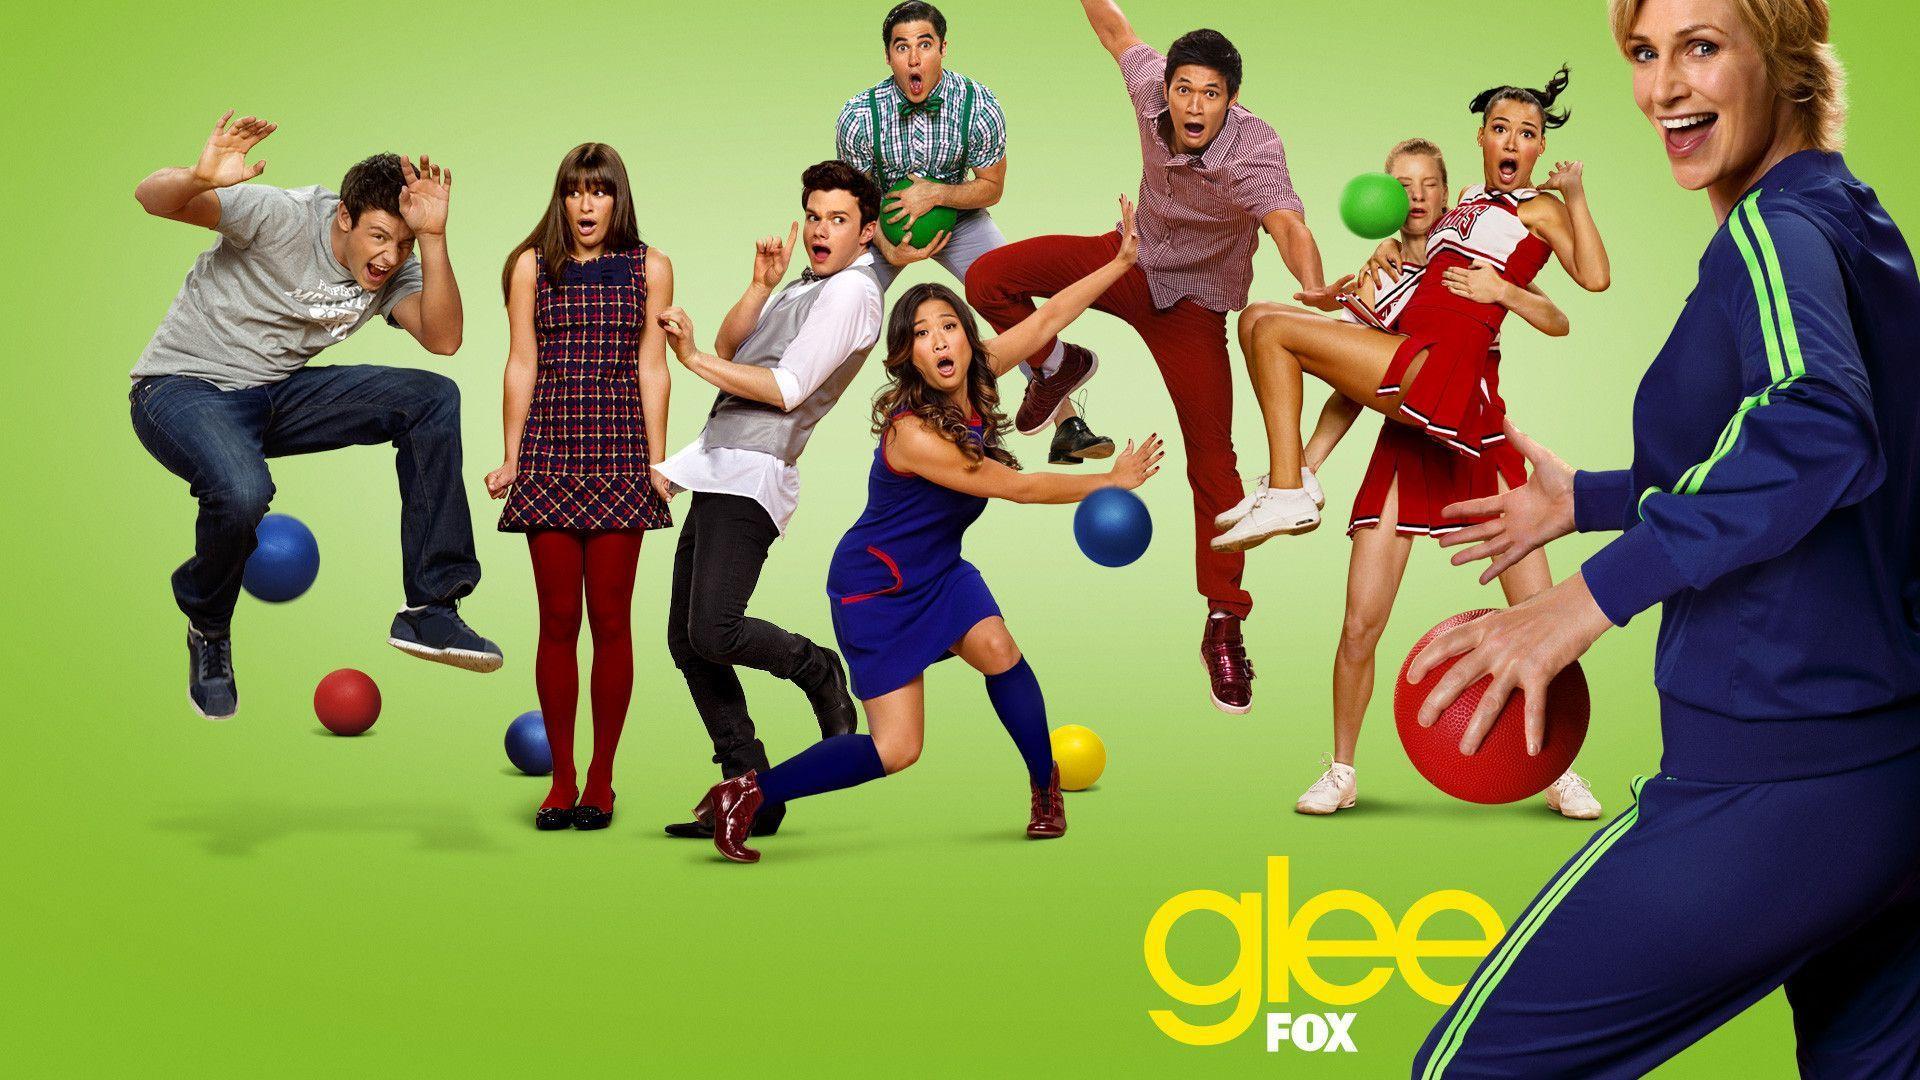 Fonds d&;écran Glee, tous les wallpaper Glee